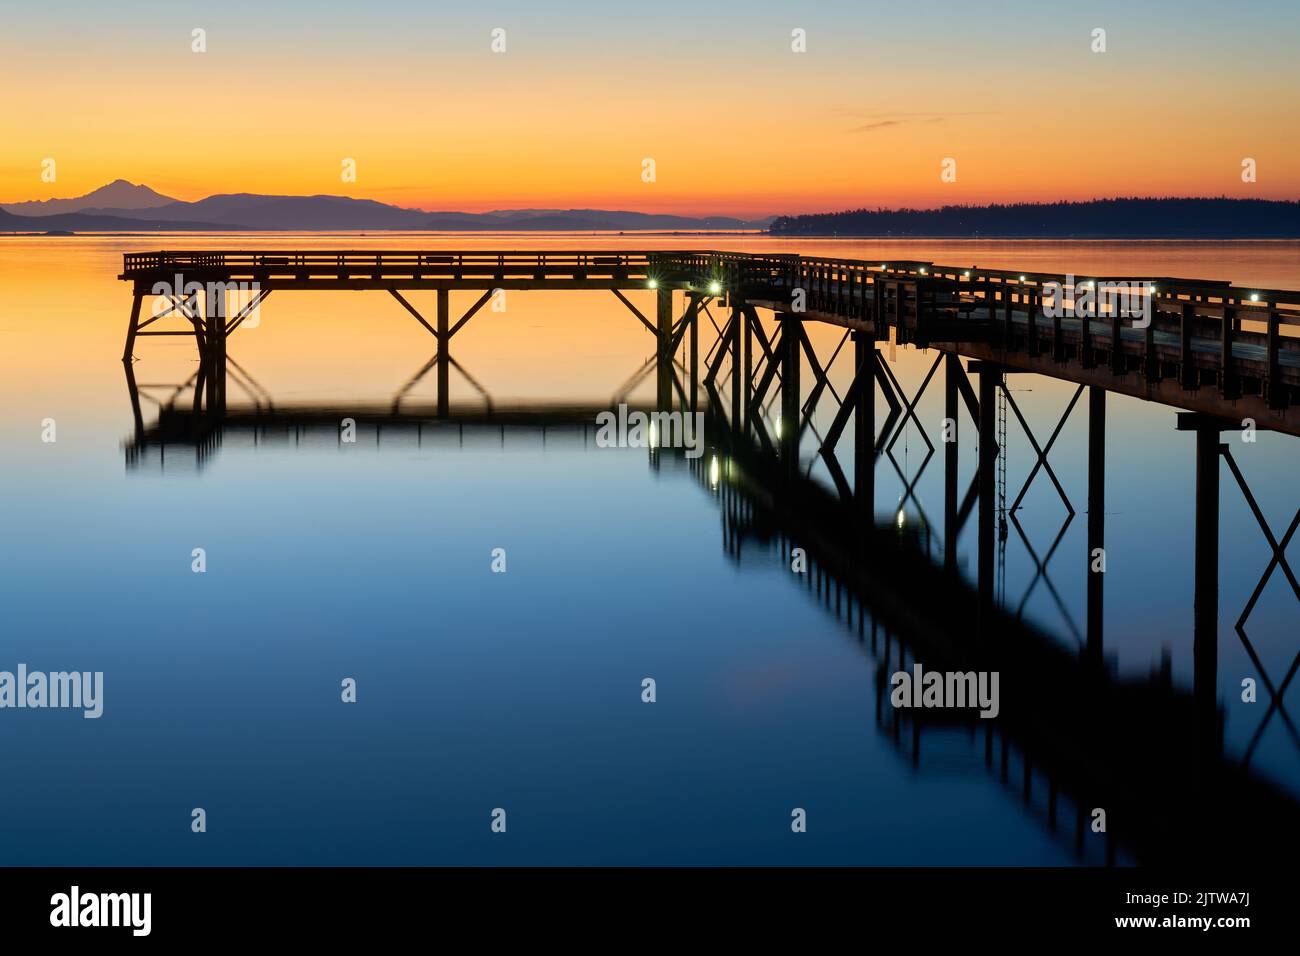 Sidney BC Fishing Pier Twilight Dawn. Summer dawn twilight behind the wooden fishing pier in Sidney British Columbia, Canada. Stock Photo